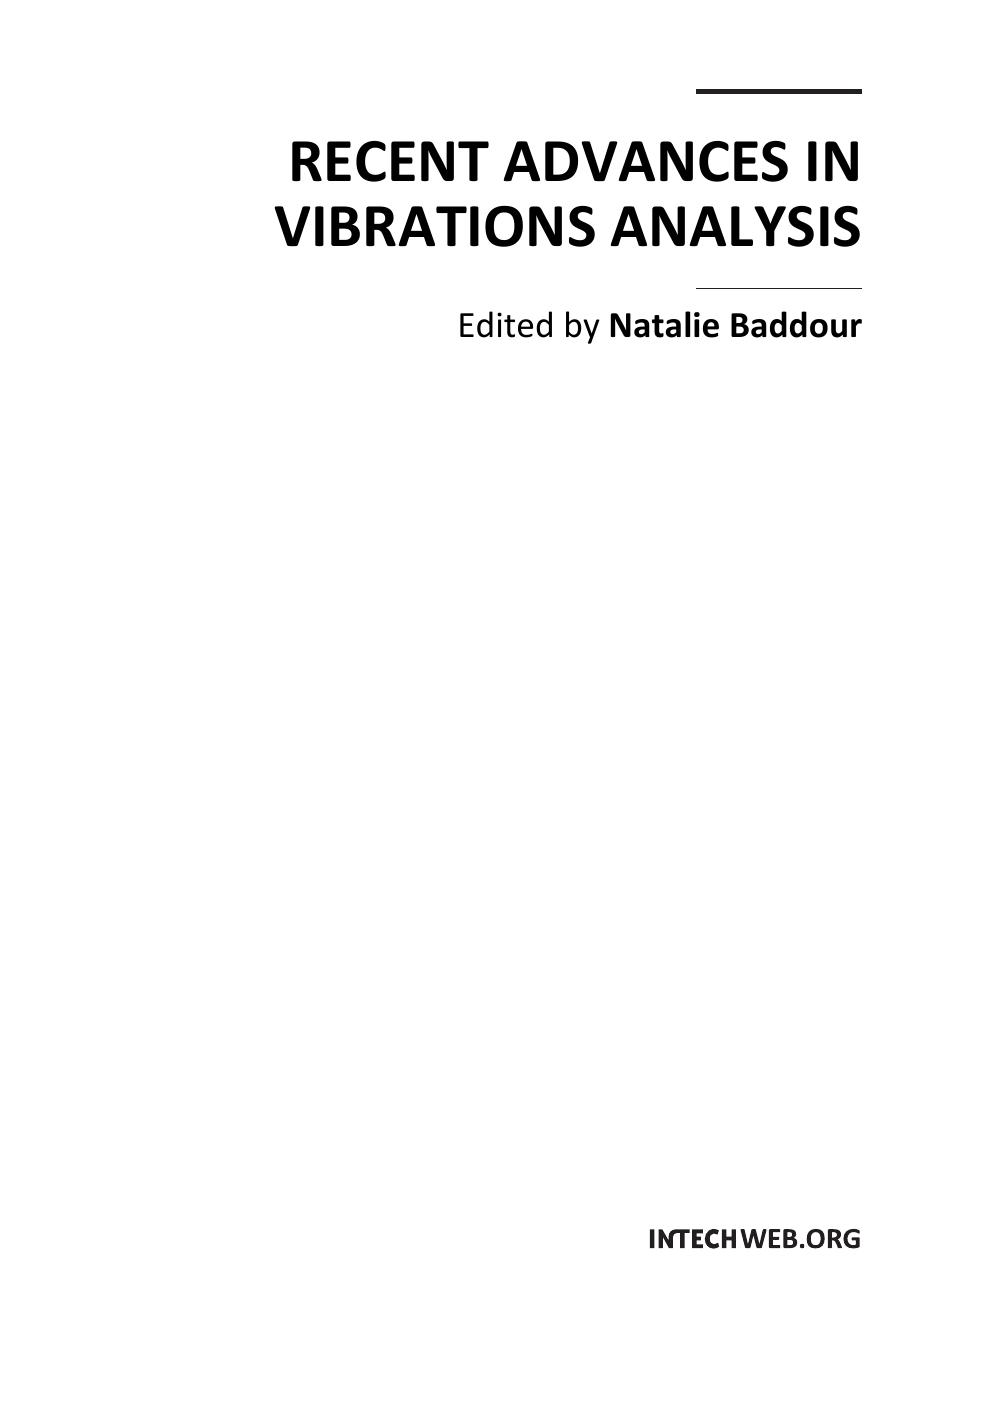 Recent Advances in Vibrations Analysis 2011.pdf